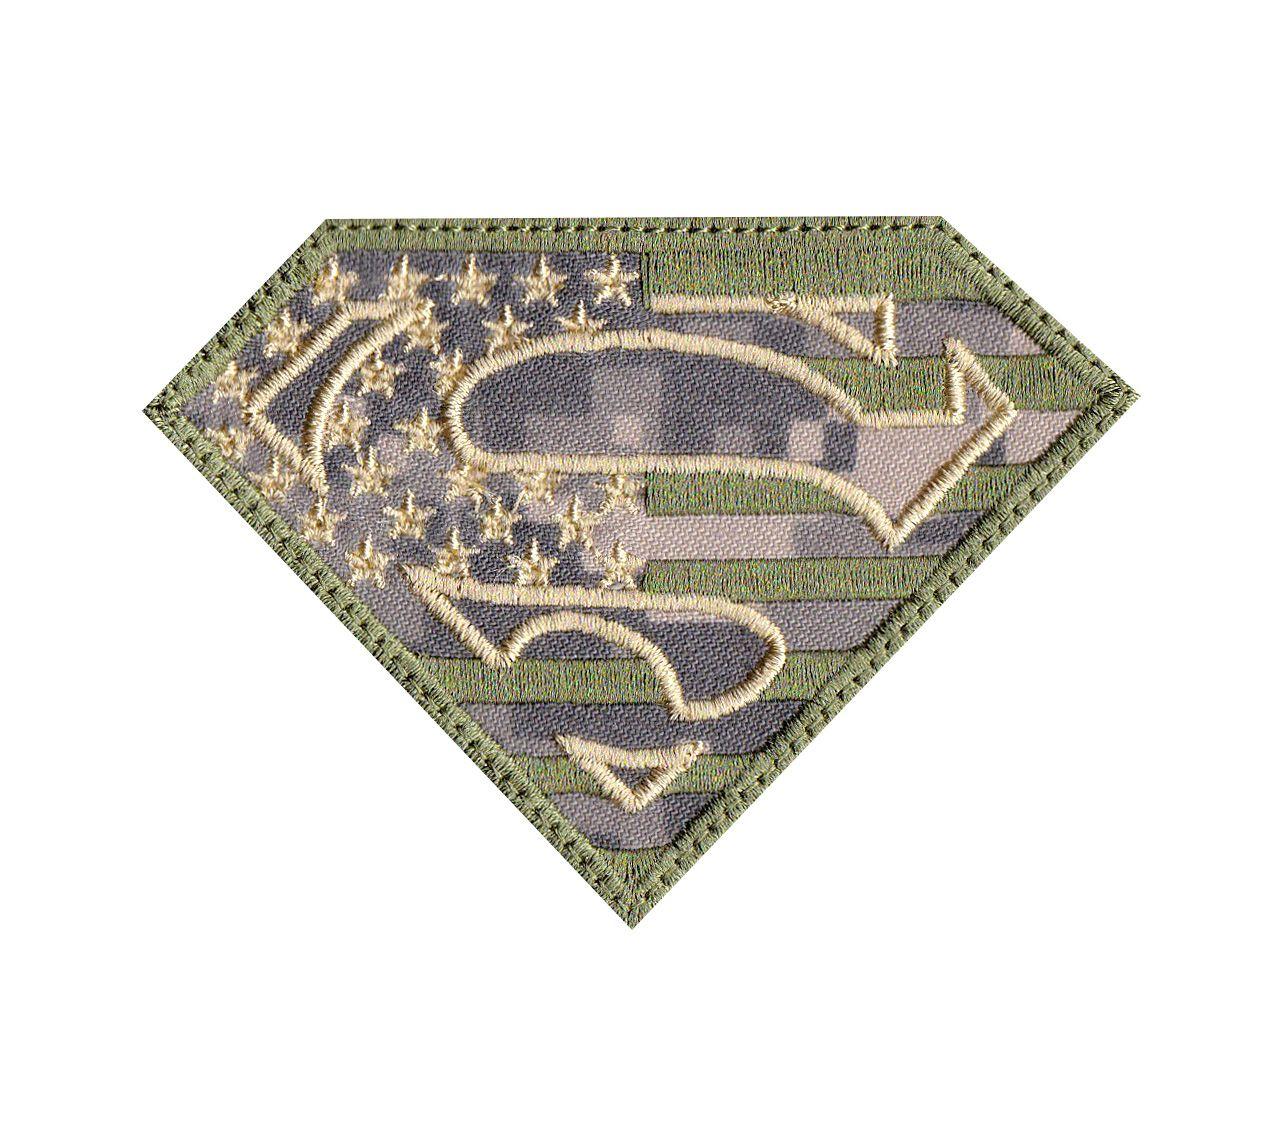 Superman Military Logo - Superman US Flag Camo Military Digicam 3.5 X 2.5 Tactical Morale